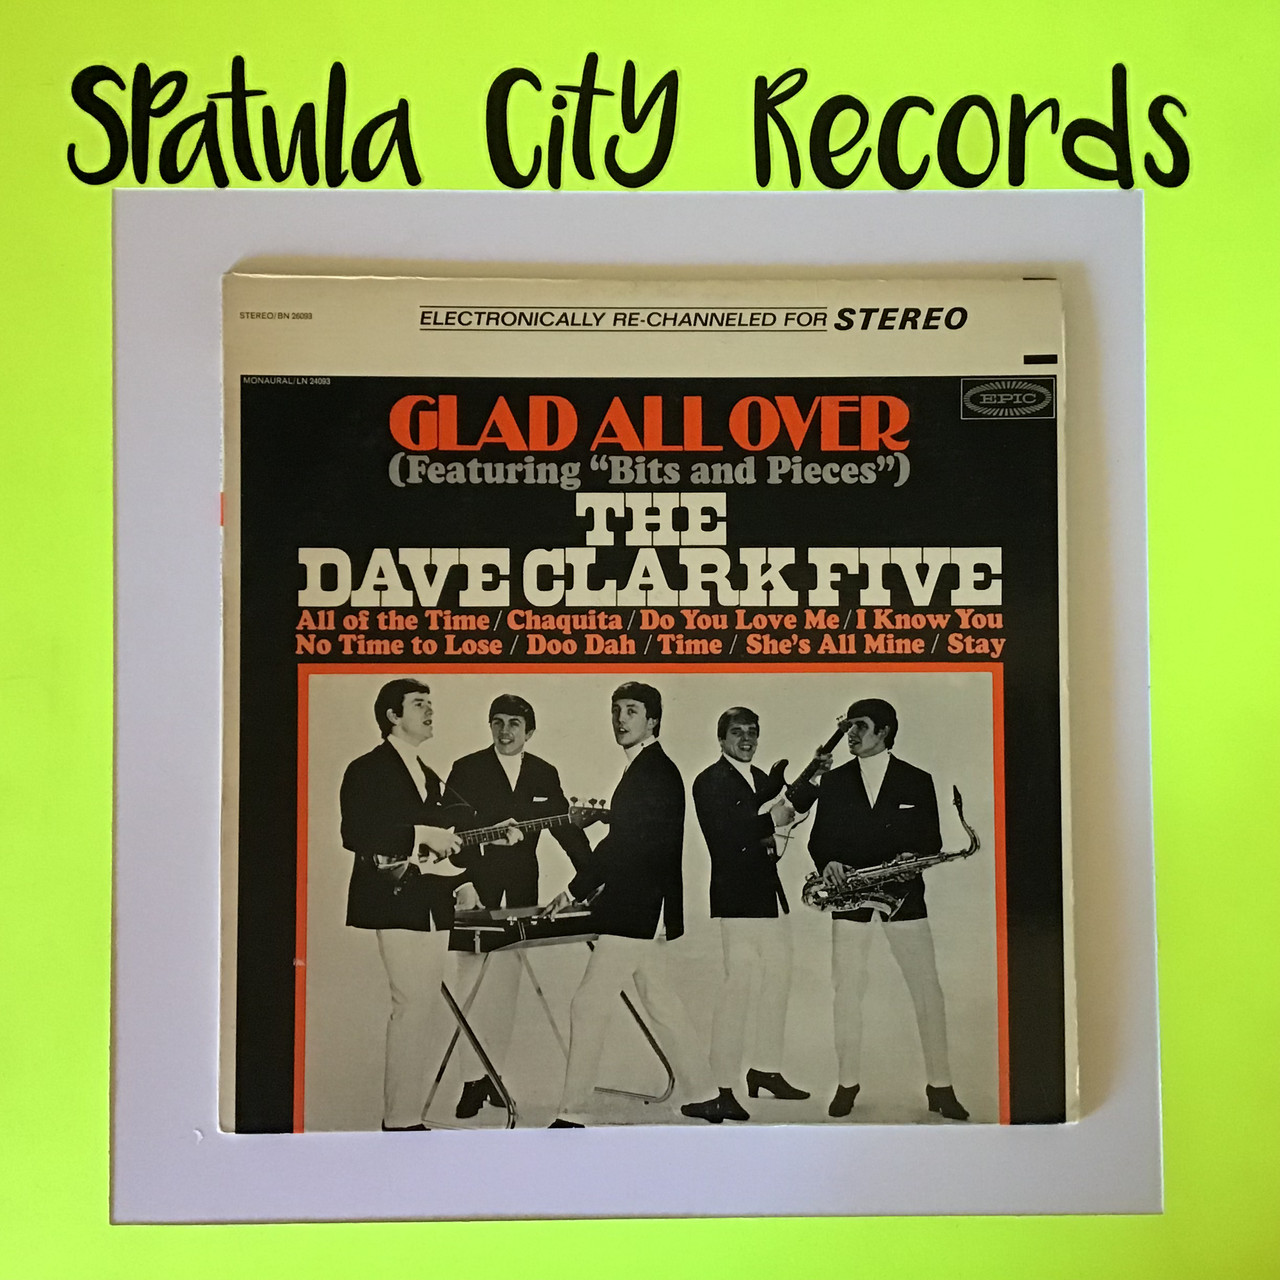 Dave Clark Five, The - Glad All Over - vinyl record album LP